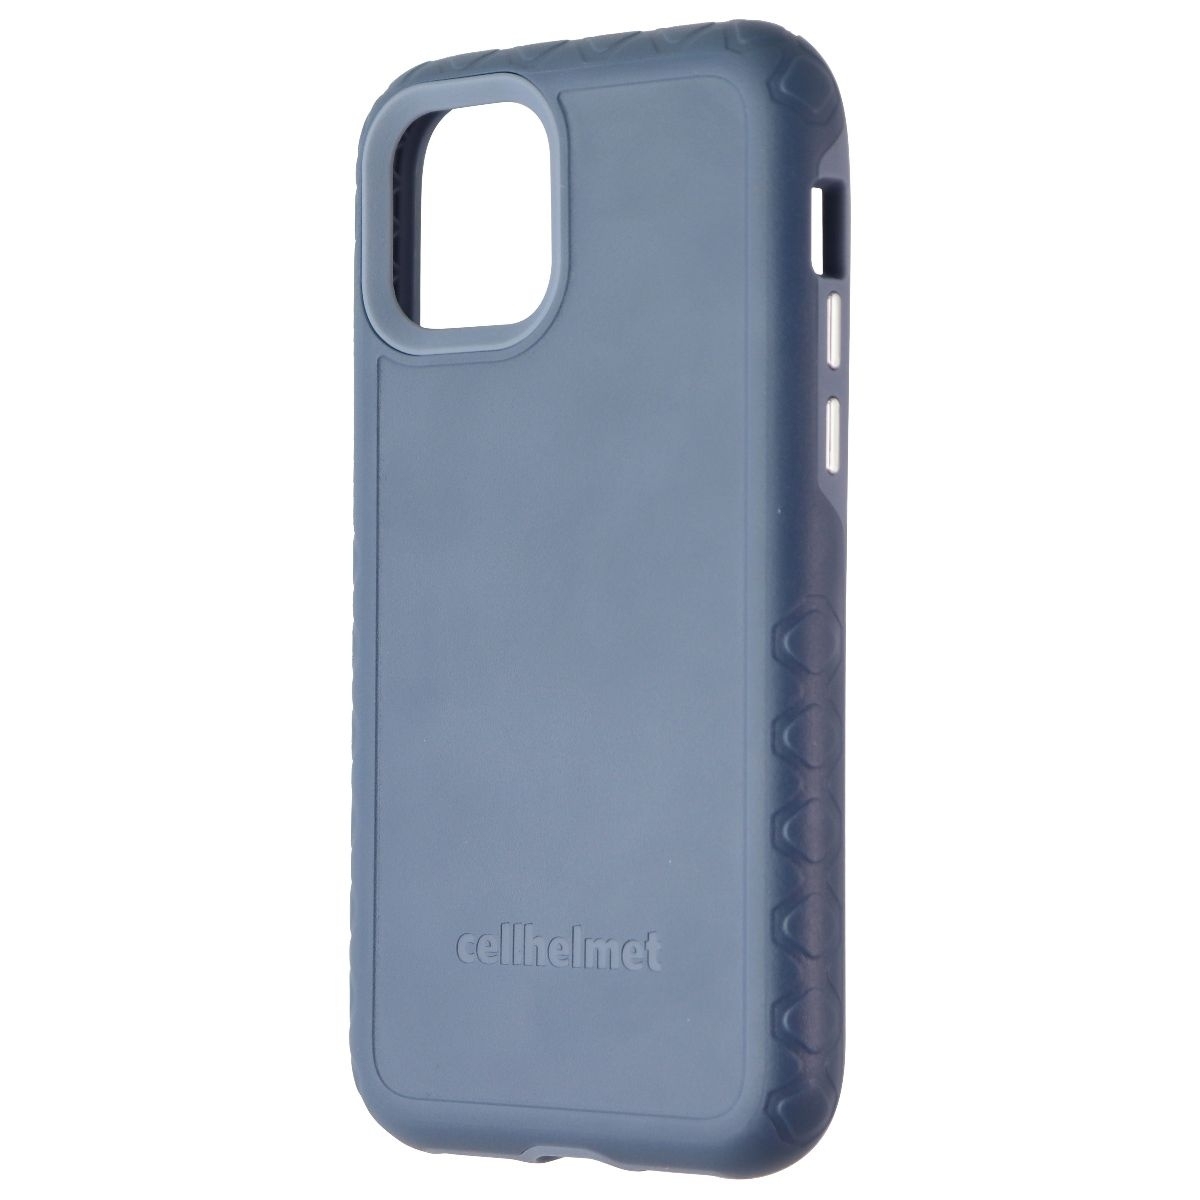 CellHelmet Fortitude PRO Series Case For Apple IPhone 11 Pro - Slate Blue